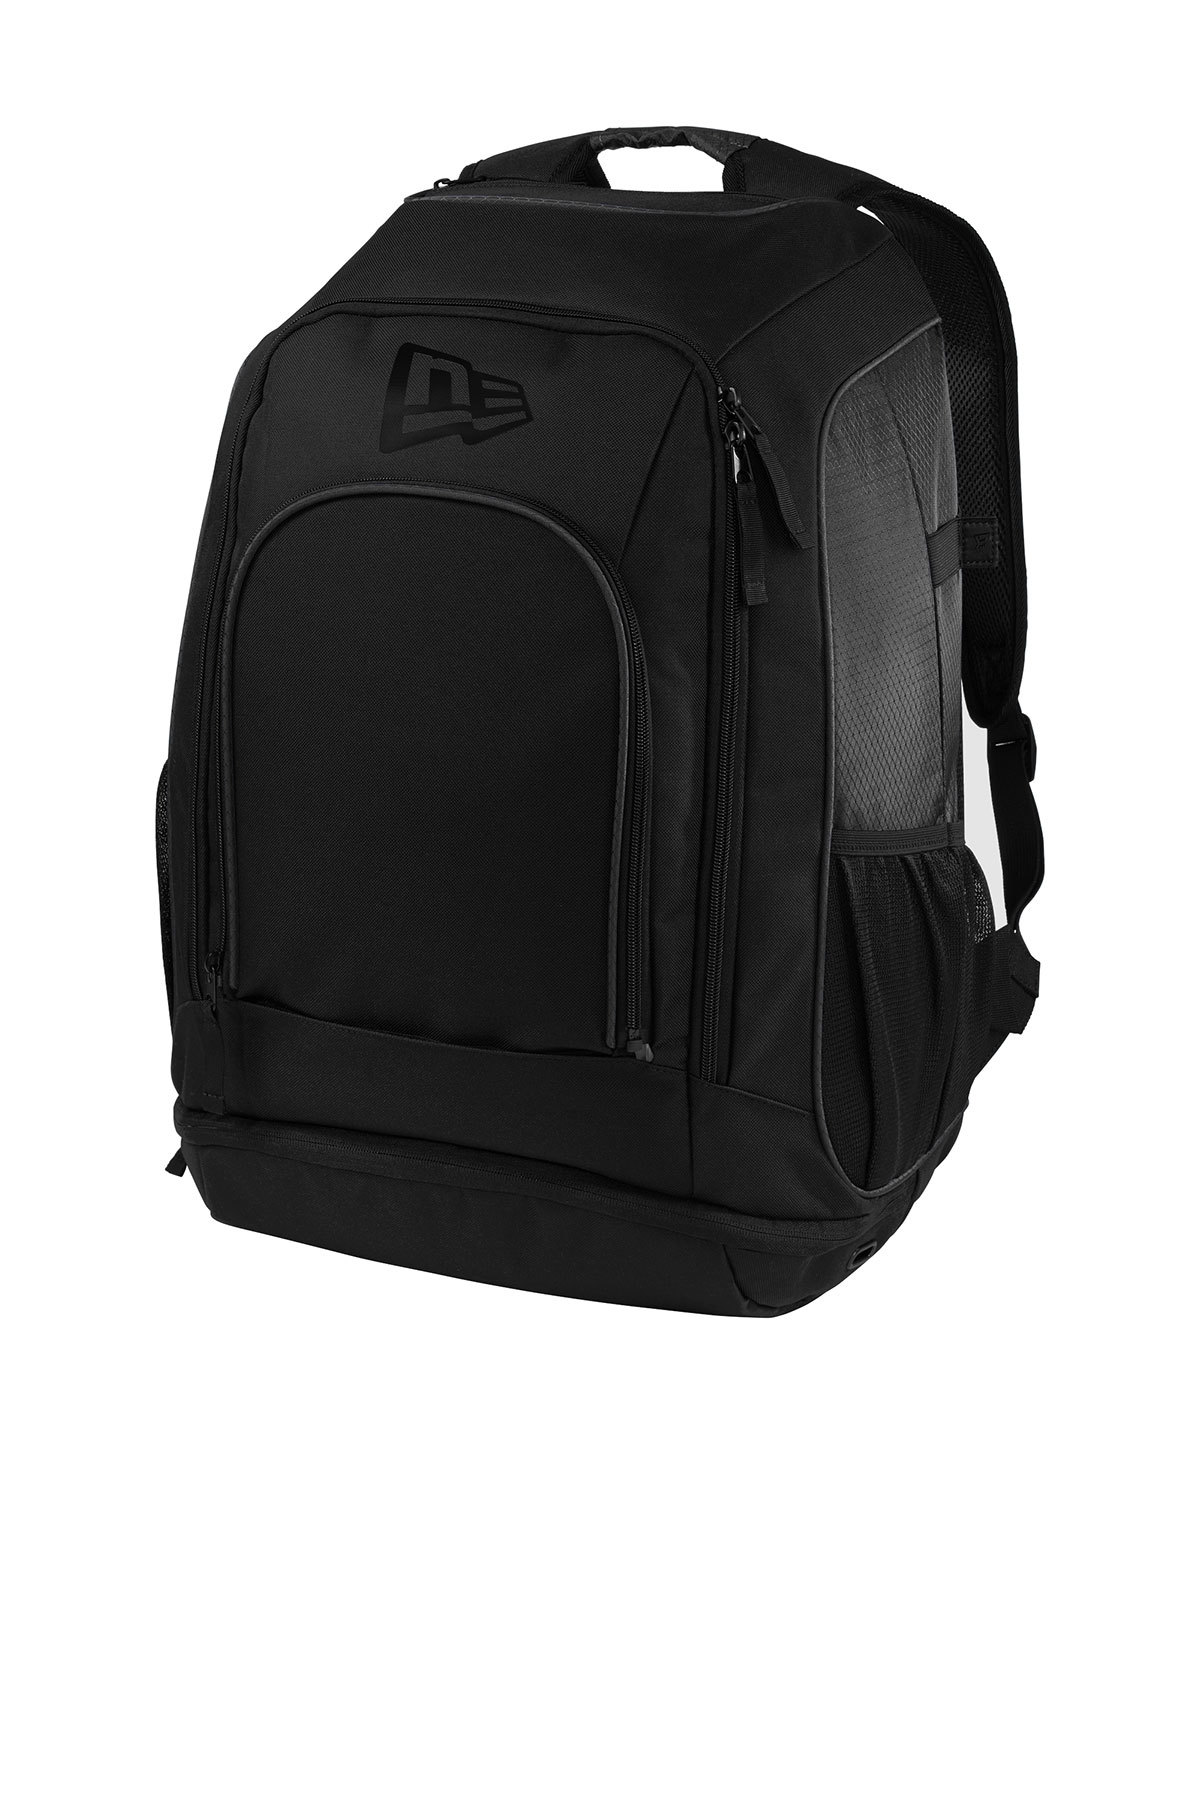 New Era Shutout Backpack | Product | SanMar